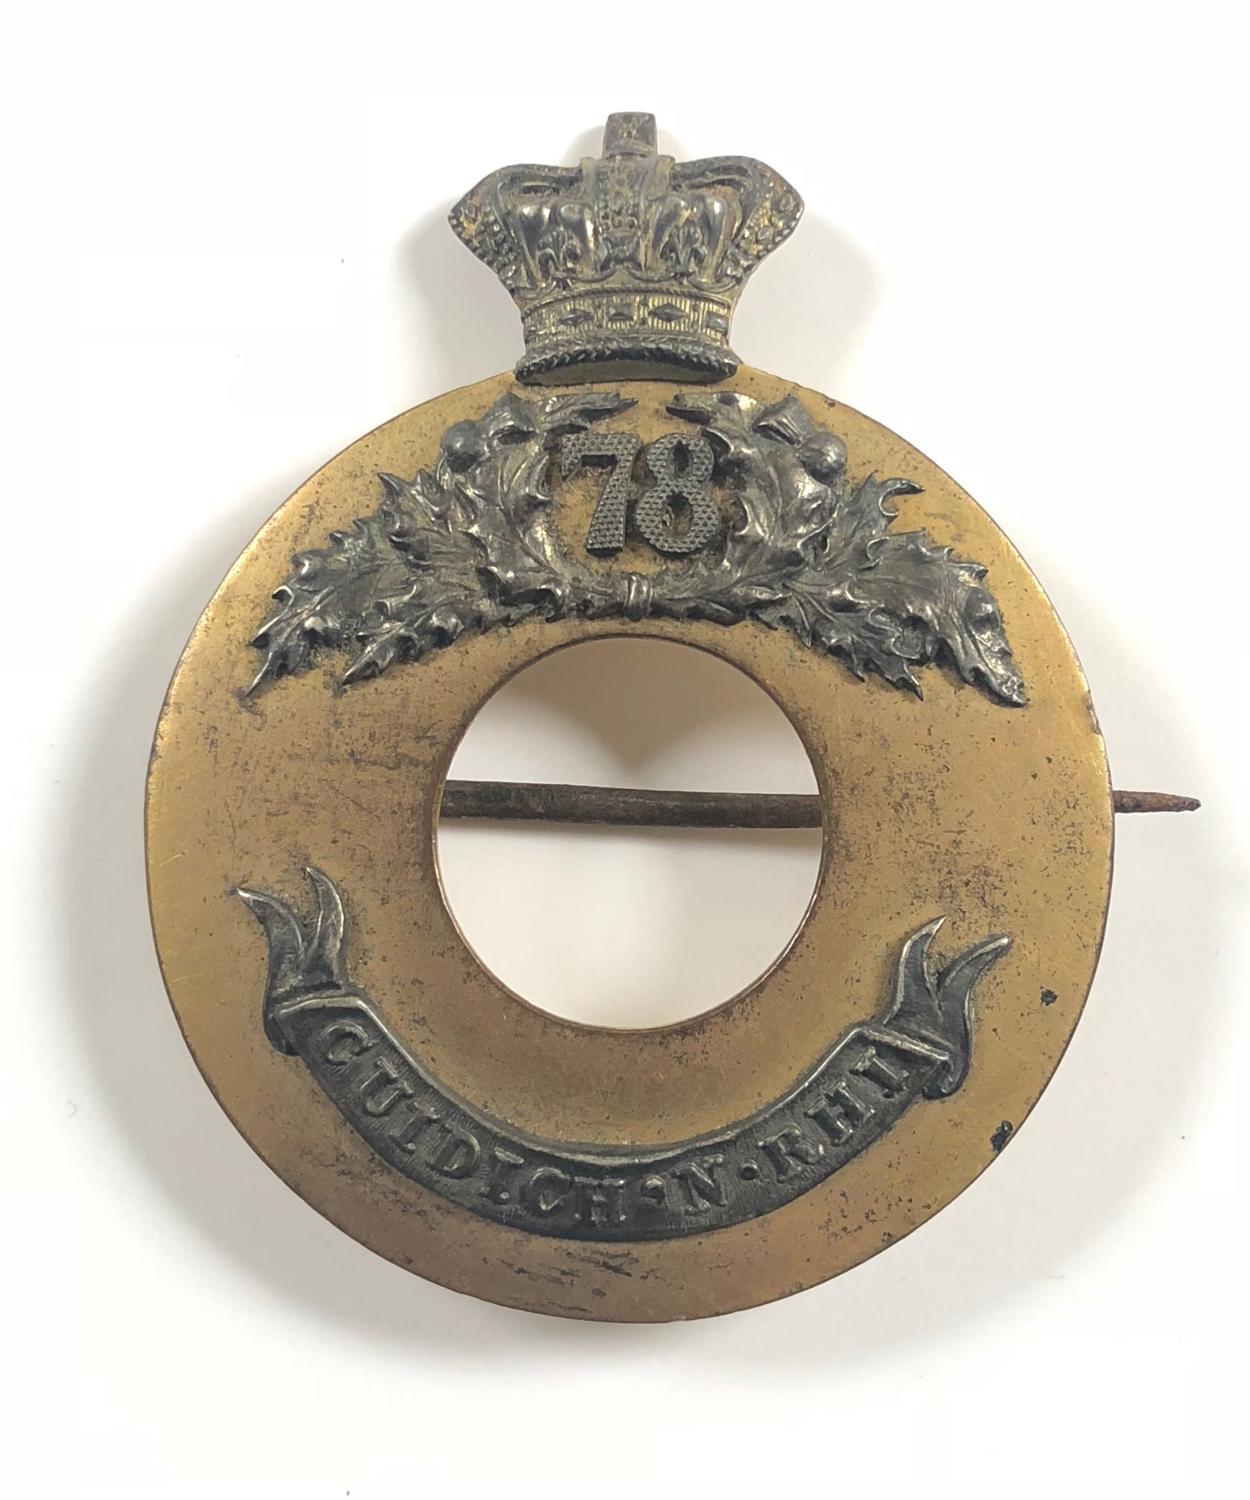 78th Highlanders (Ross-shire) Buffs Victorian Officer’s plaid brooch